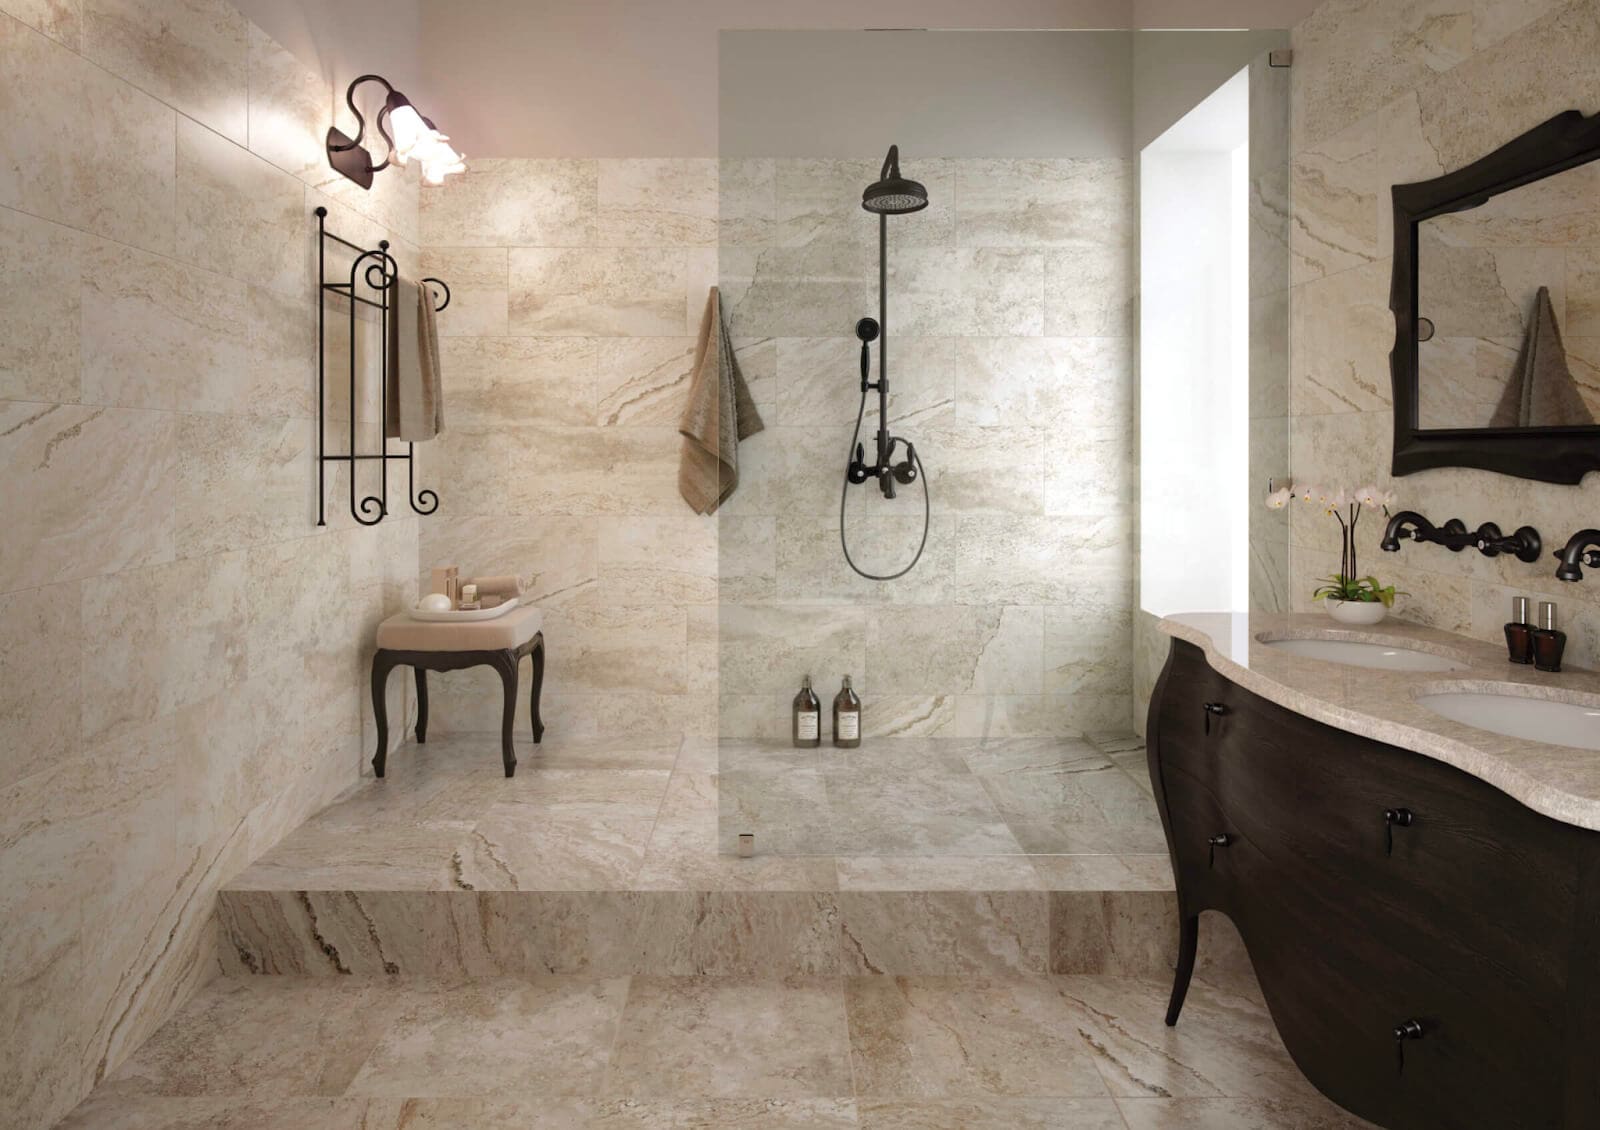 Classic bathroom with light stone-look tile backsplash

